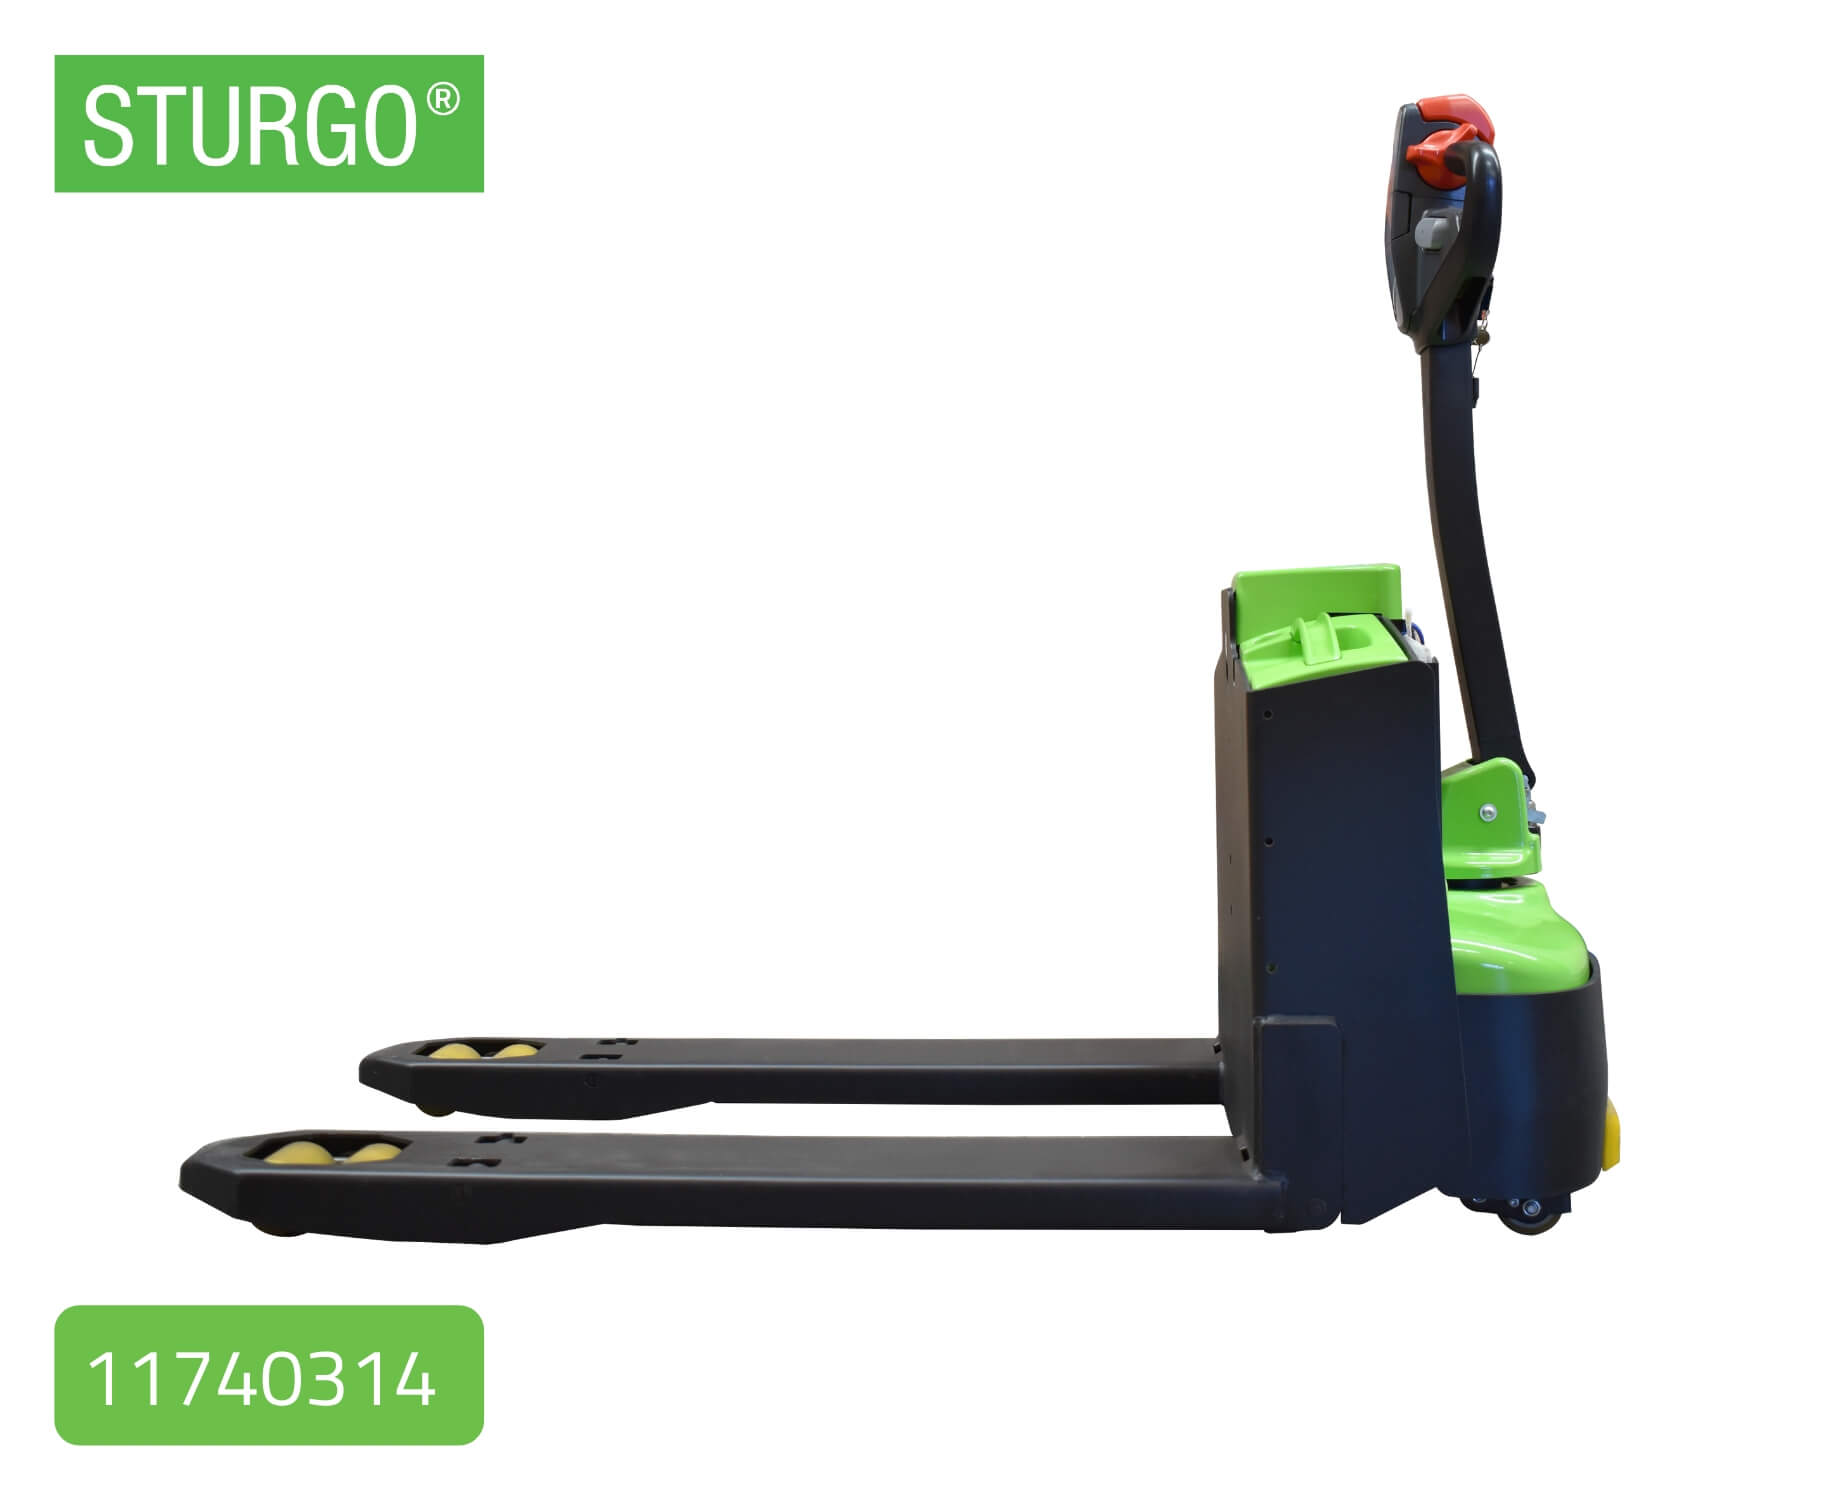 STURGO® Compact Electric Pallet Jack 2T Lithium